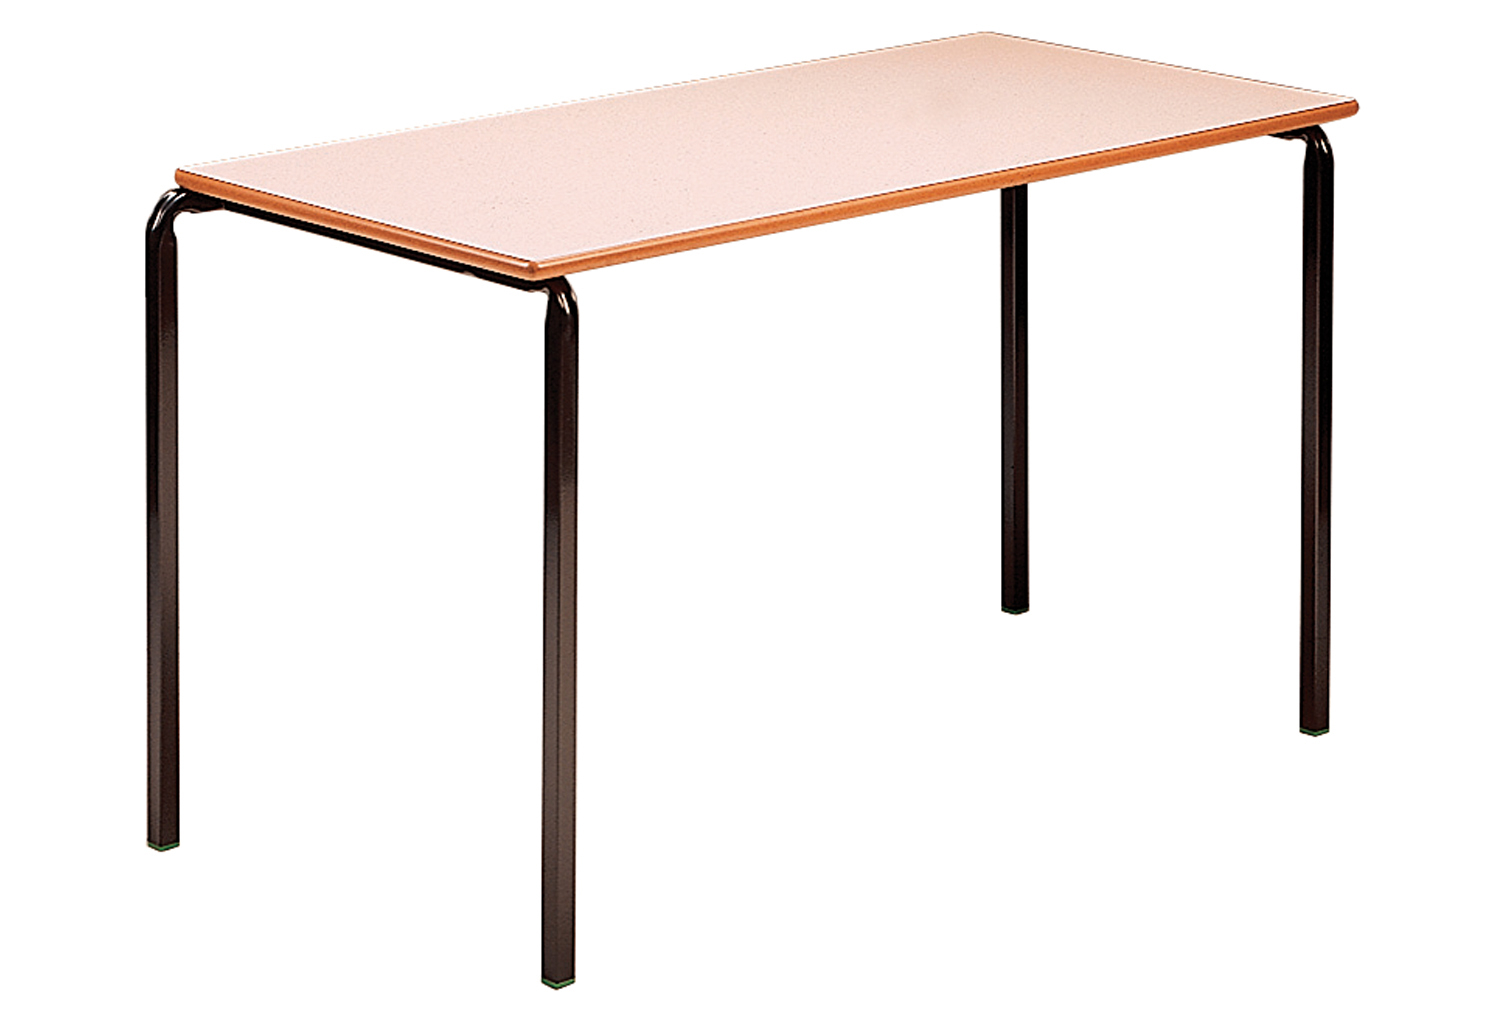 Qty 4 - Rectangular Crush Bent Classroom Tables 11-14 Years, 110wx55dx71h (cm), Black Frame,Beech Top,MDF Beech Edge